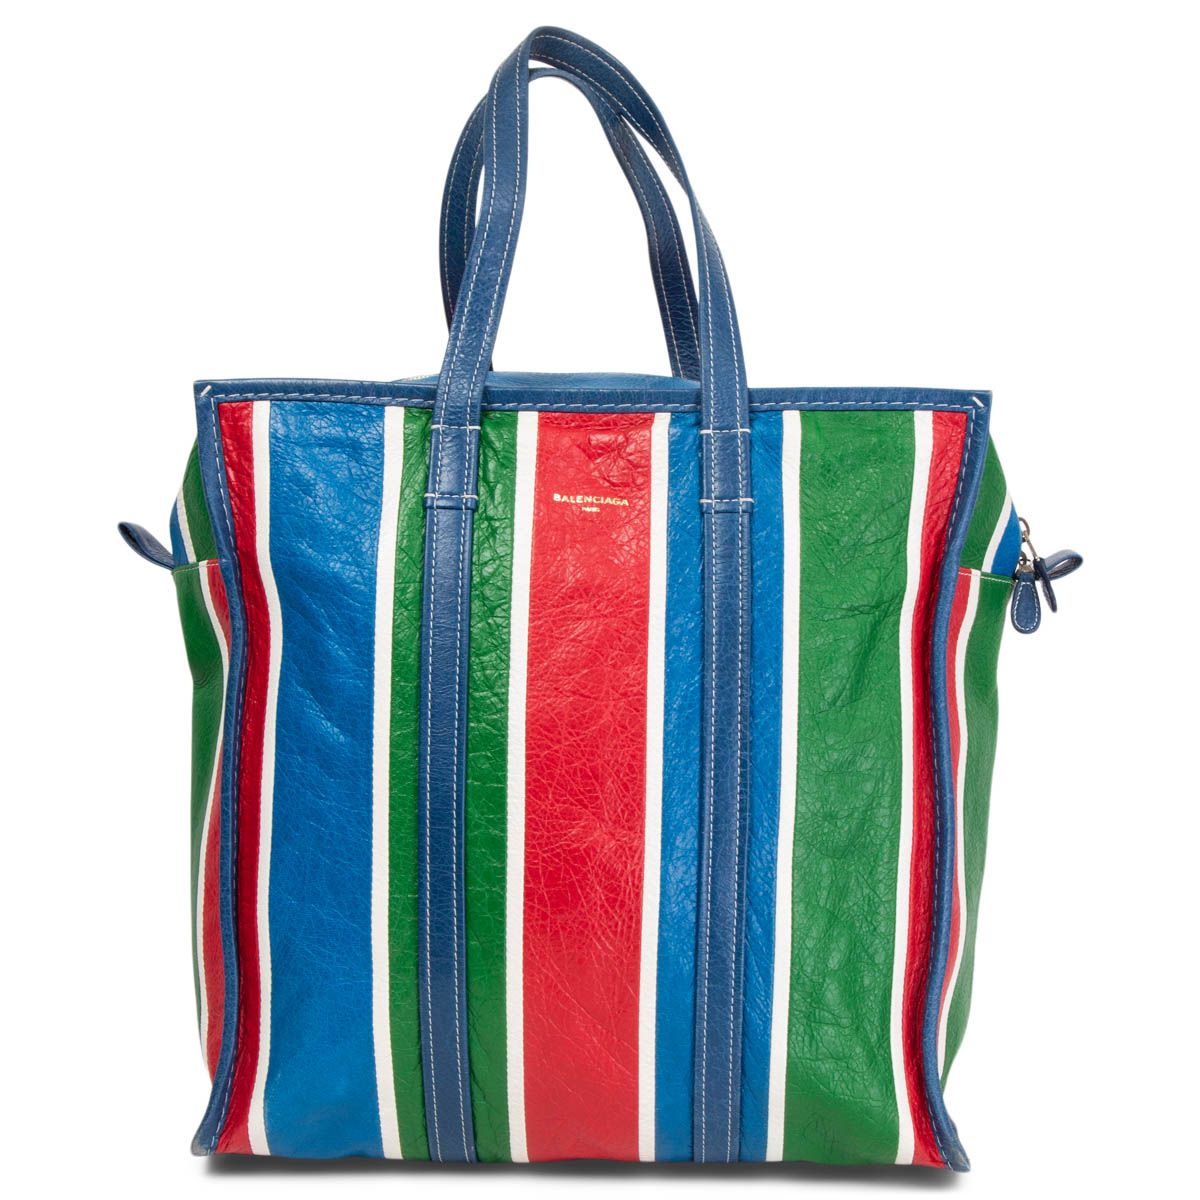 Best luxury bag brands in bangladesh, by Shopping Corner